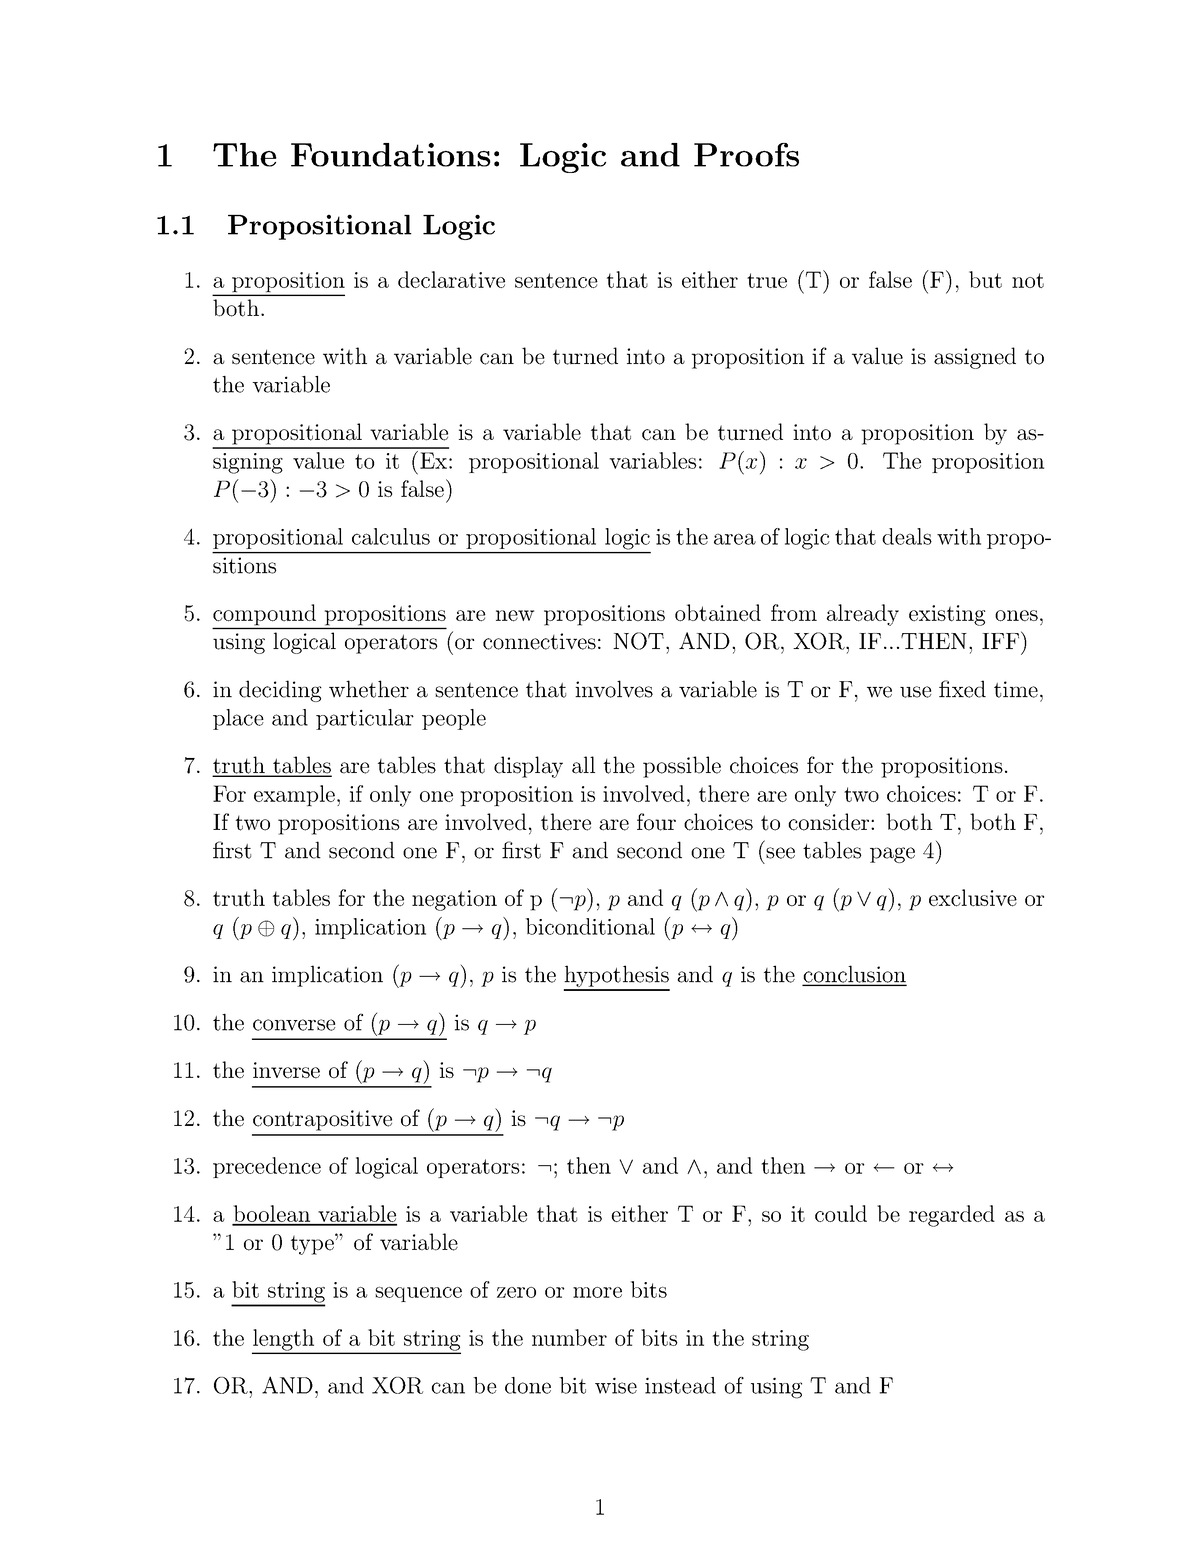 mathematics 511 assignment answers